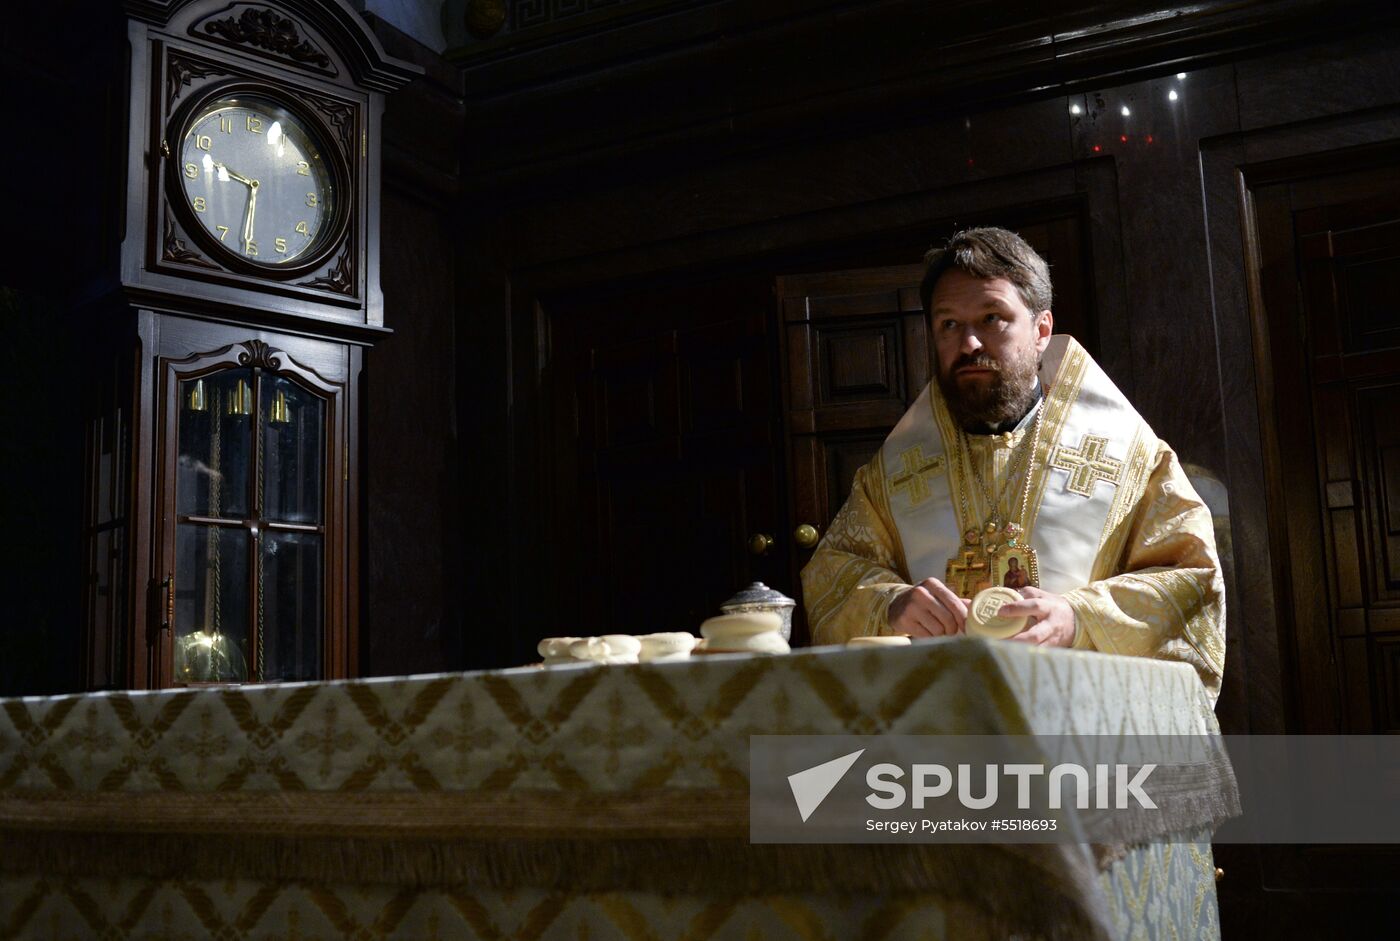 Russian Minister of Internal Affairs Vladimir Kolokoltsev passes ancient icons to Patriarch Kirill